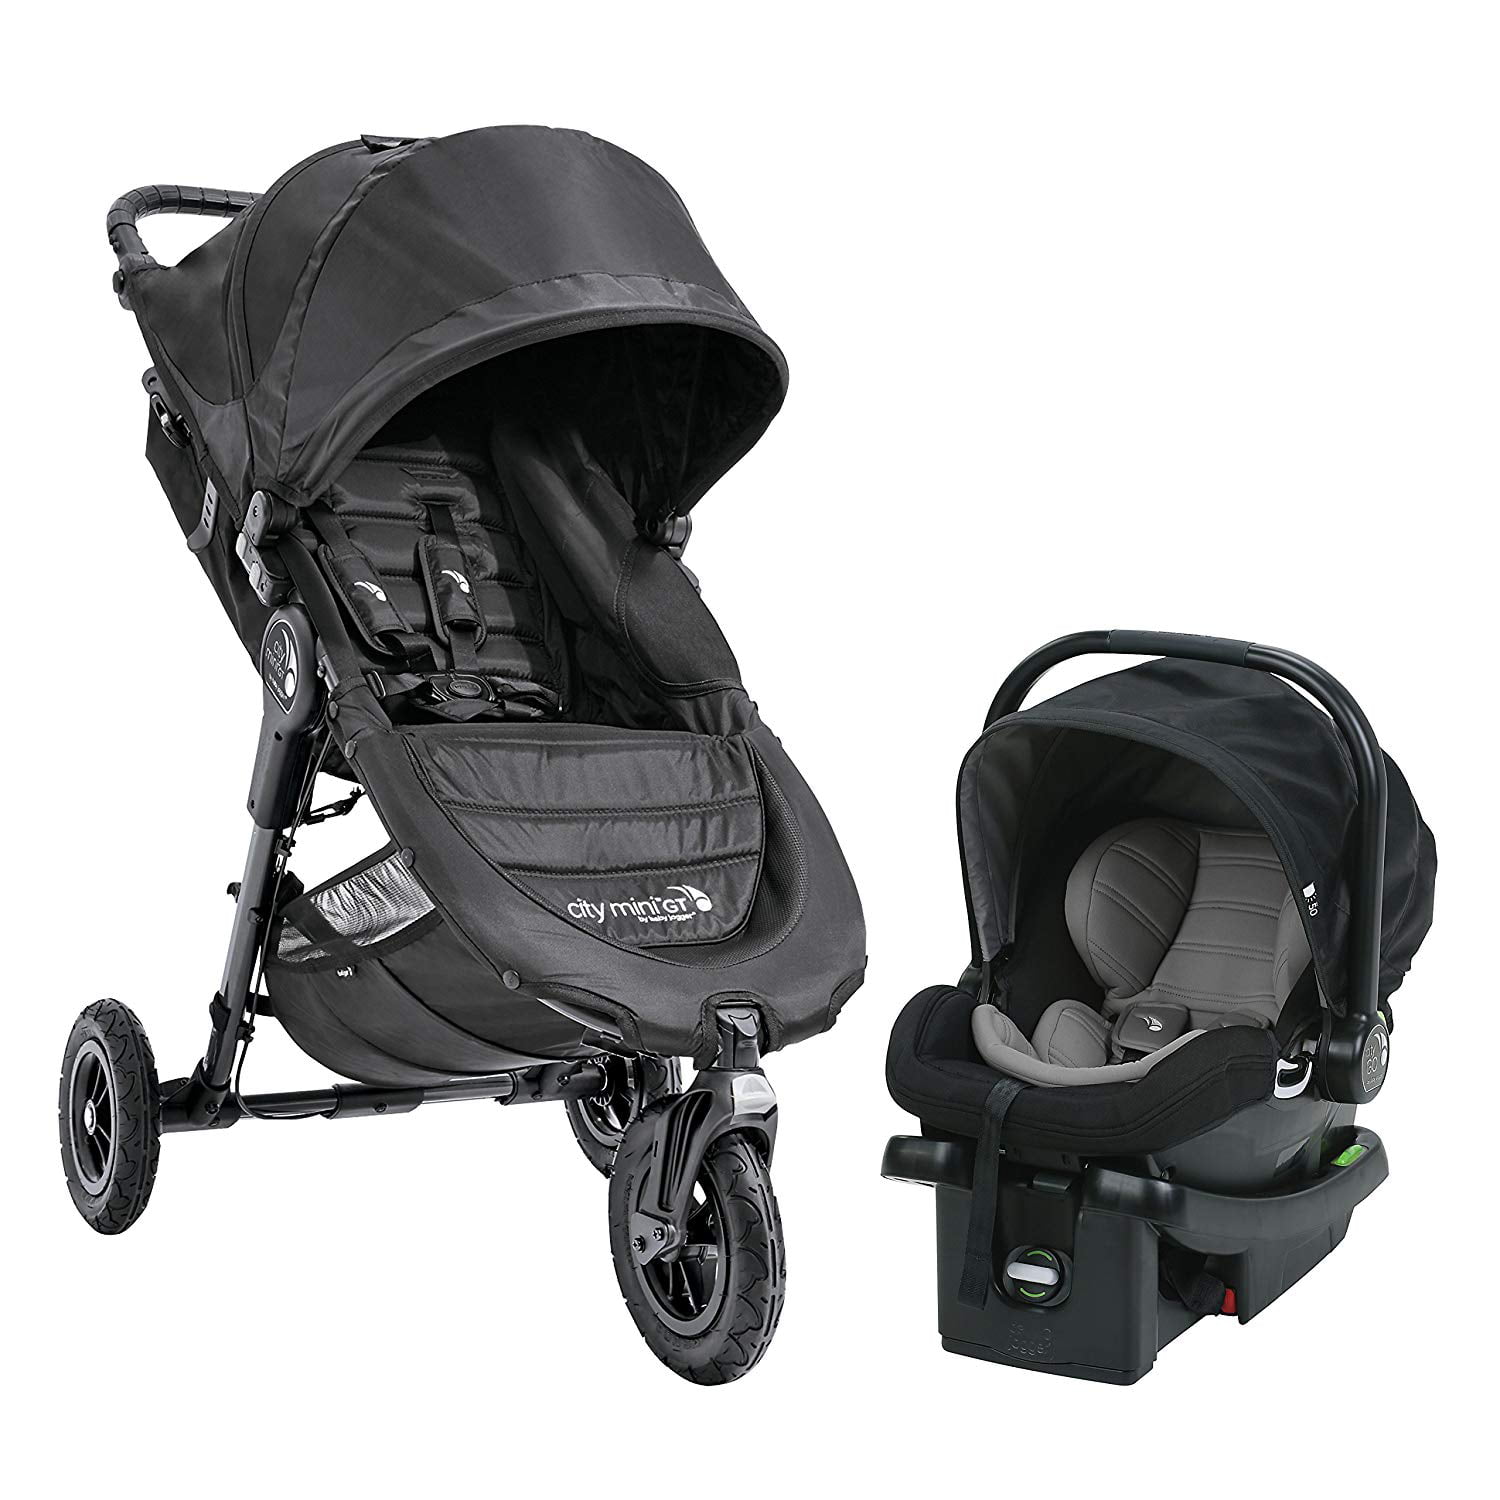 2018 Baby Jogger City Mini Gt System w/City Go Car Seat & Adapter - Walmart.com